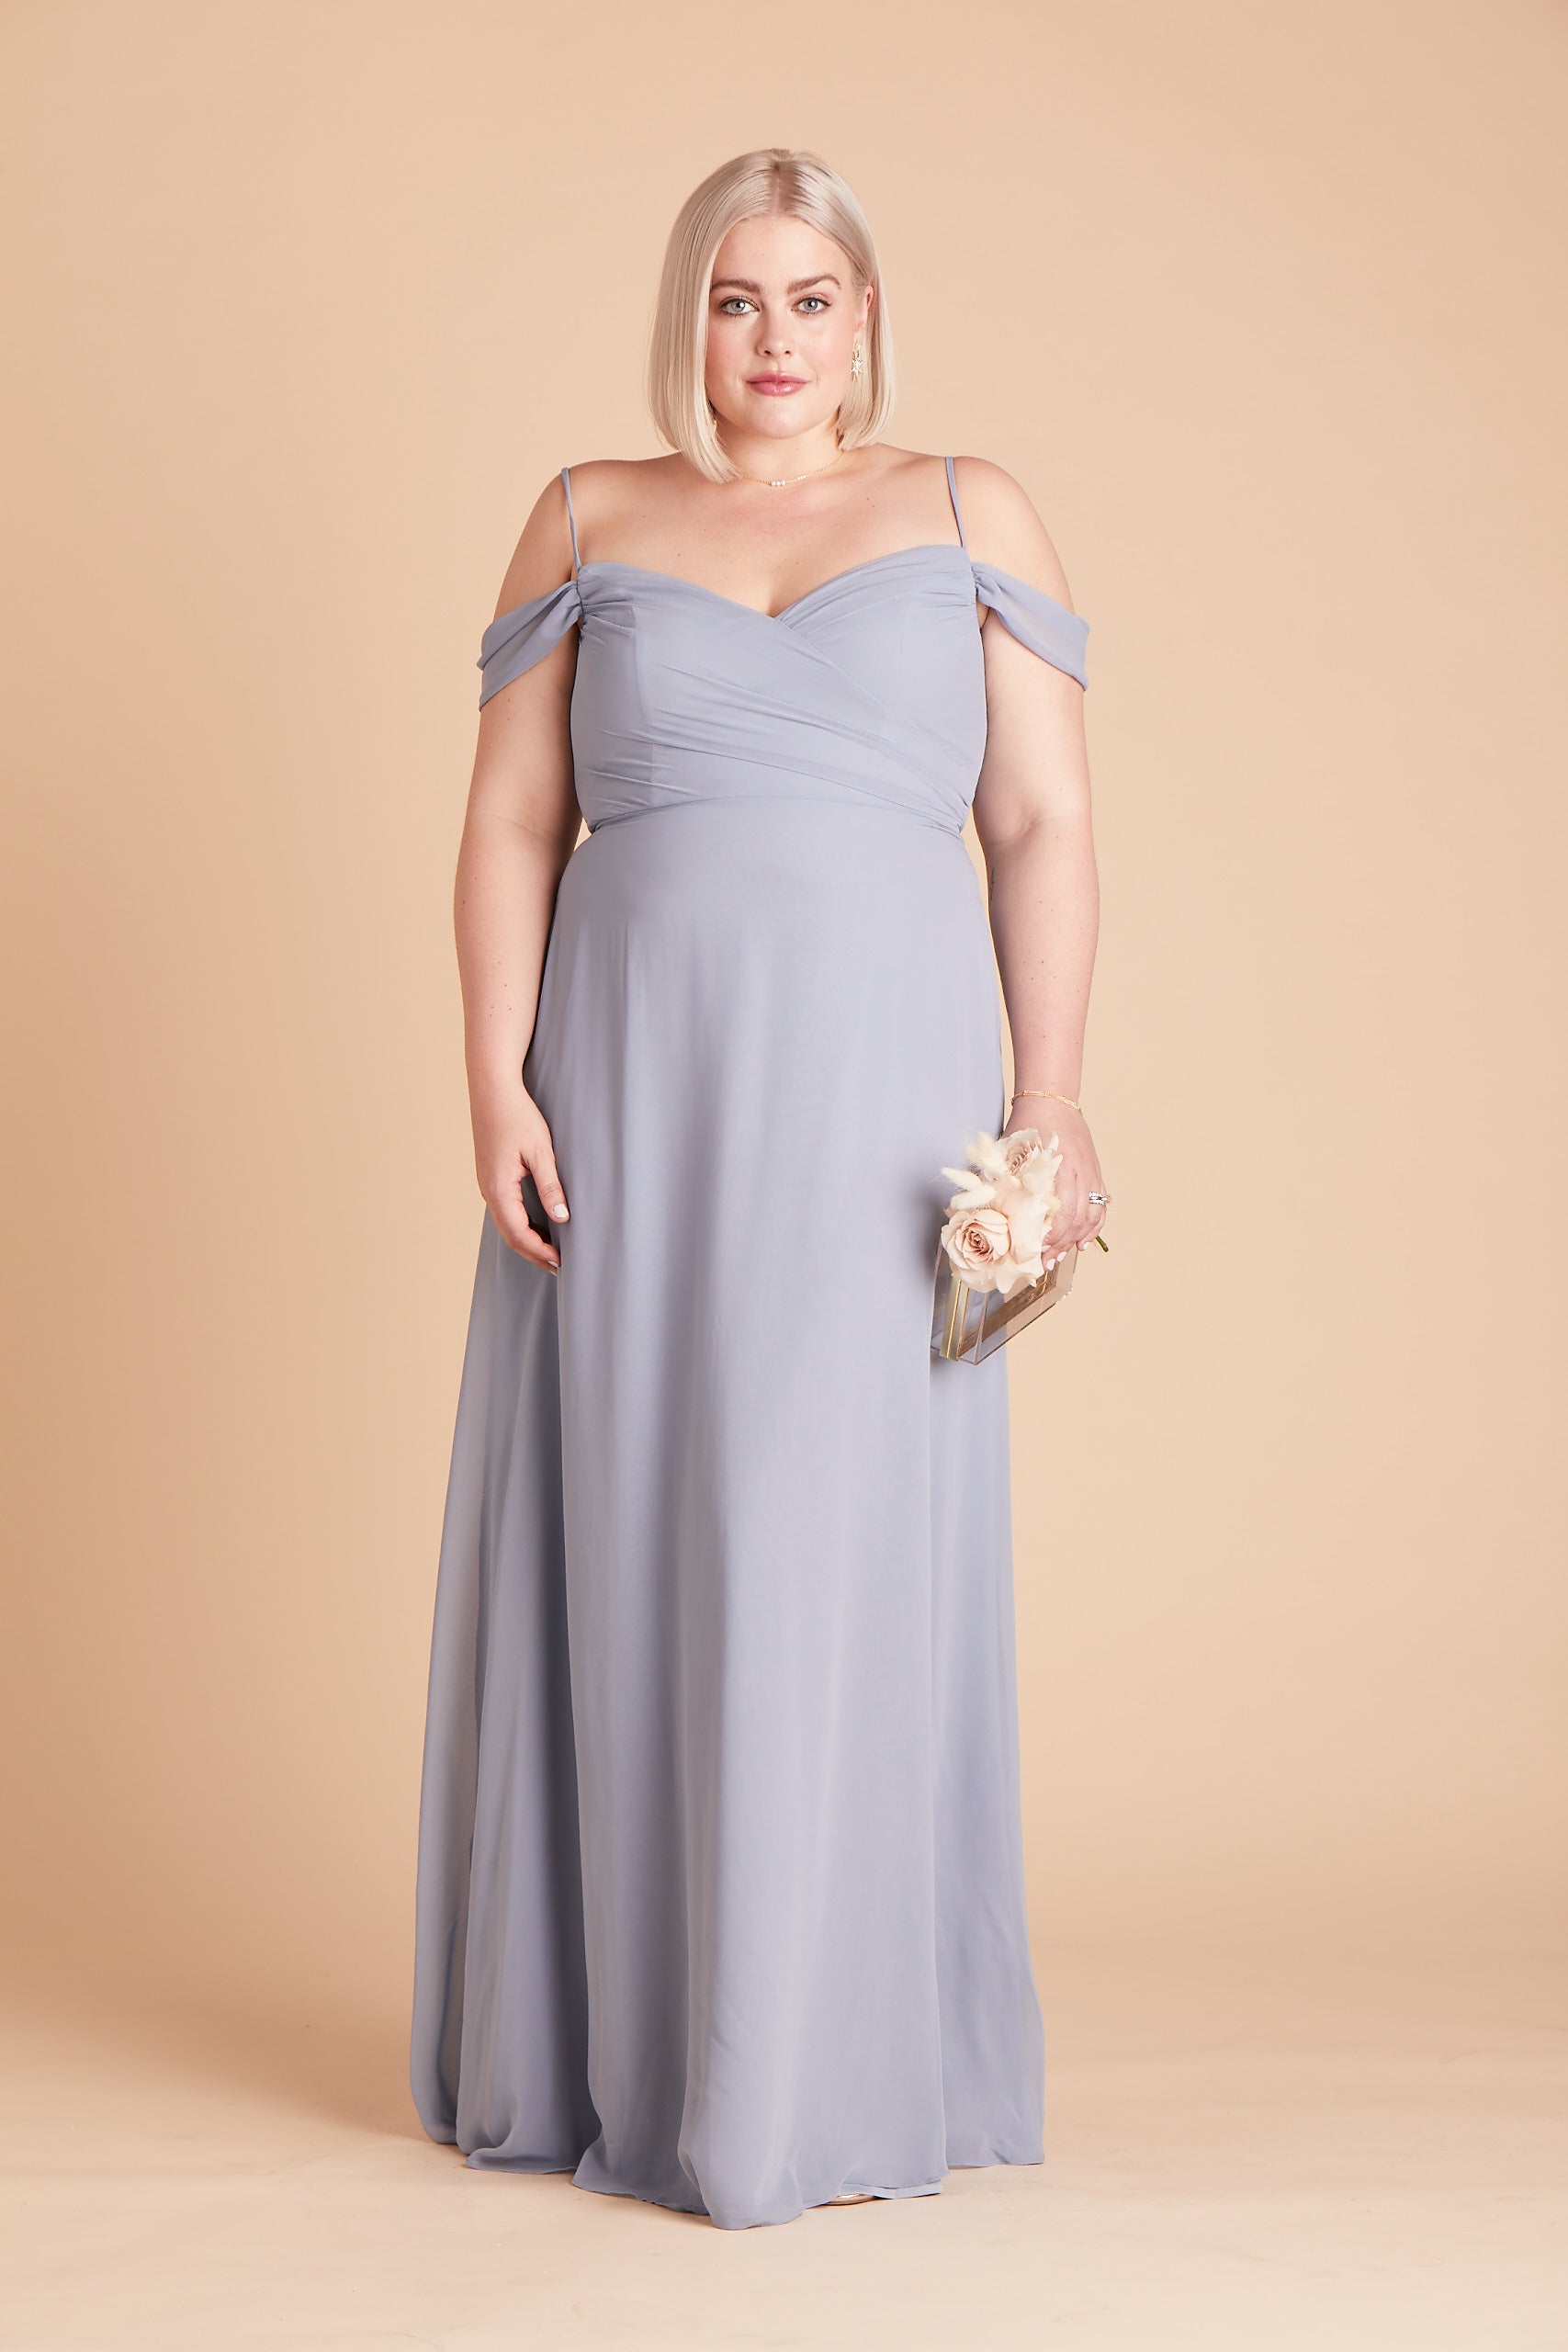 Spence Convertible Dress - Dusty Blue